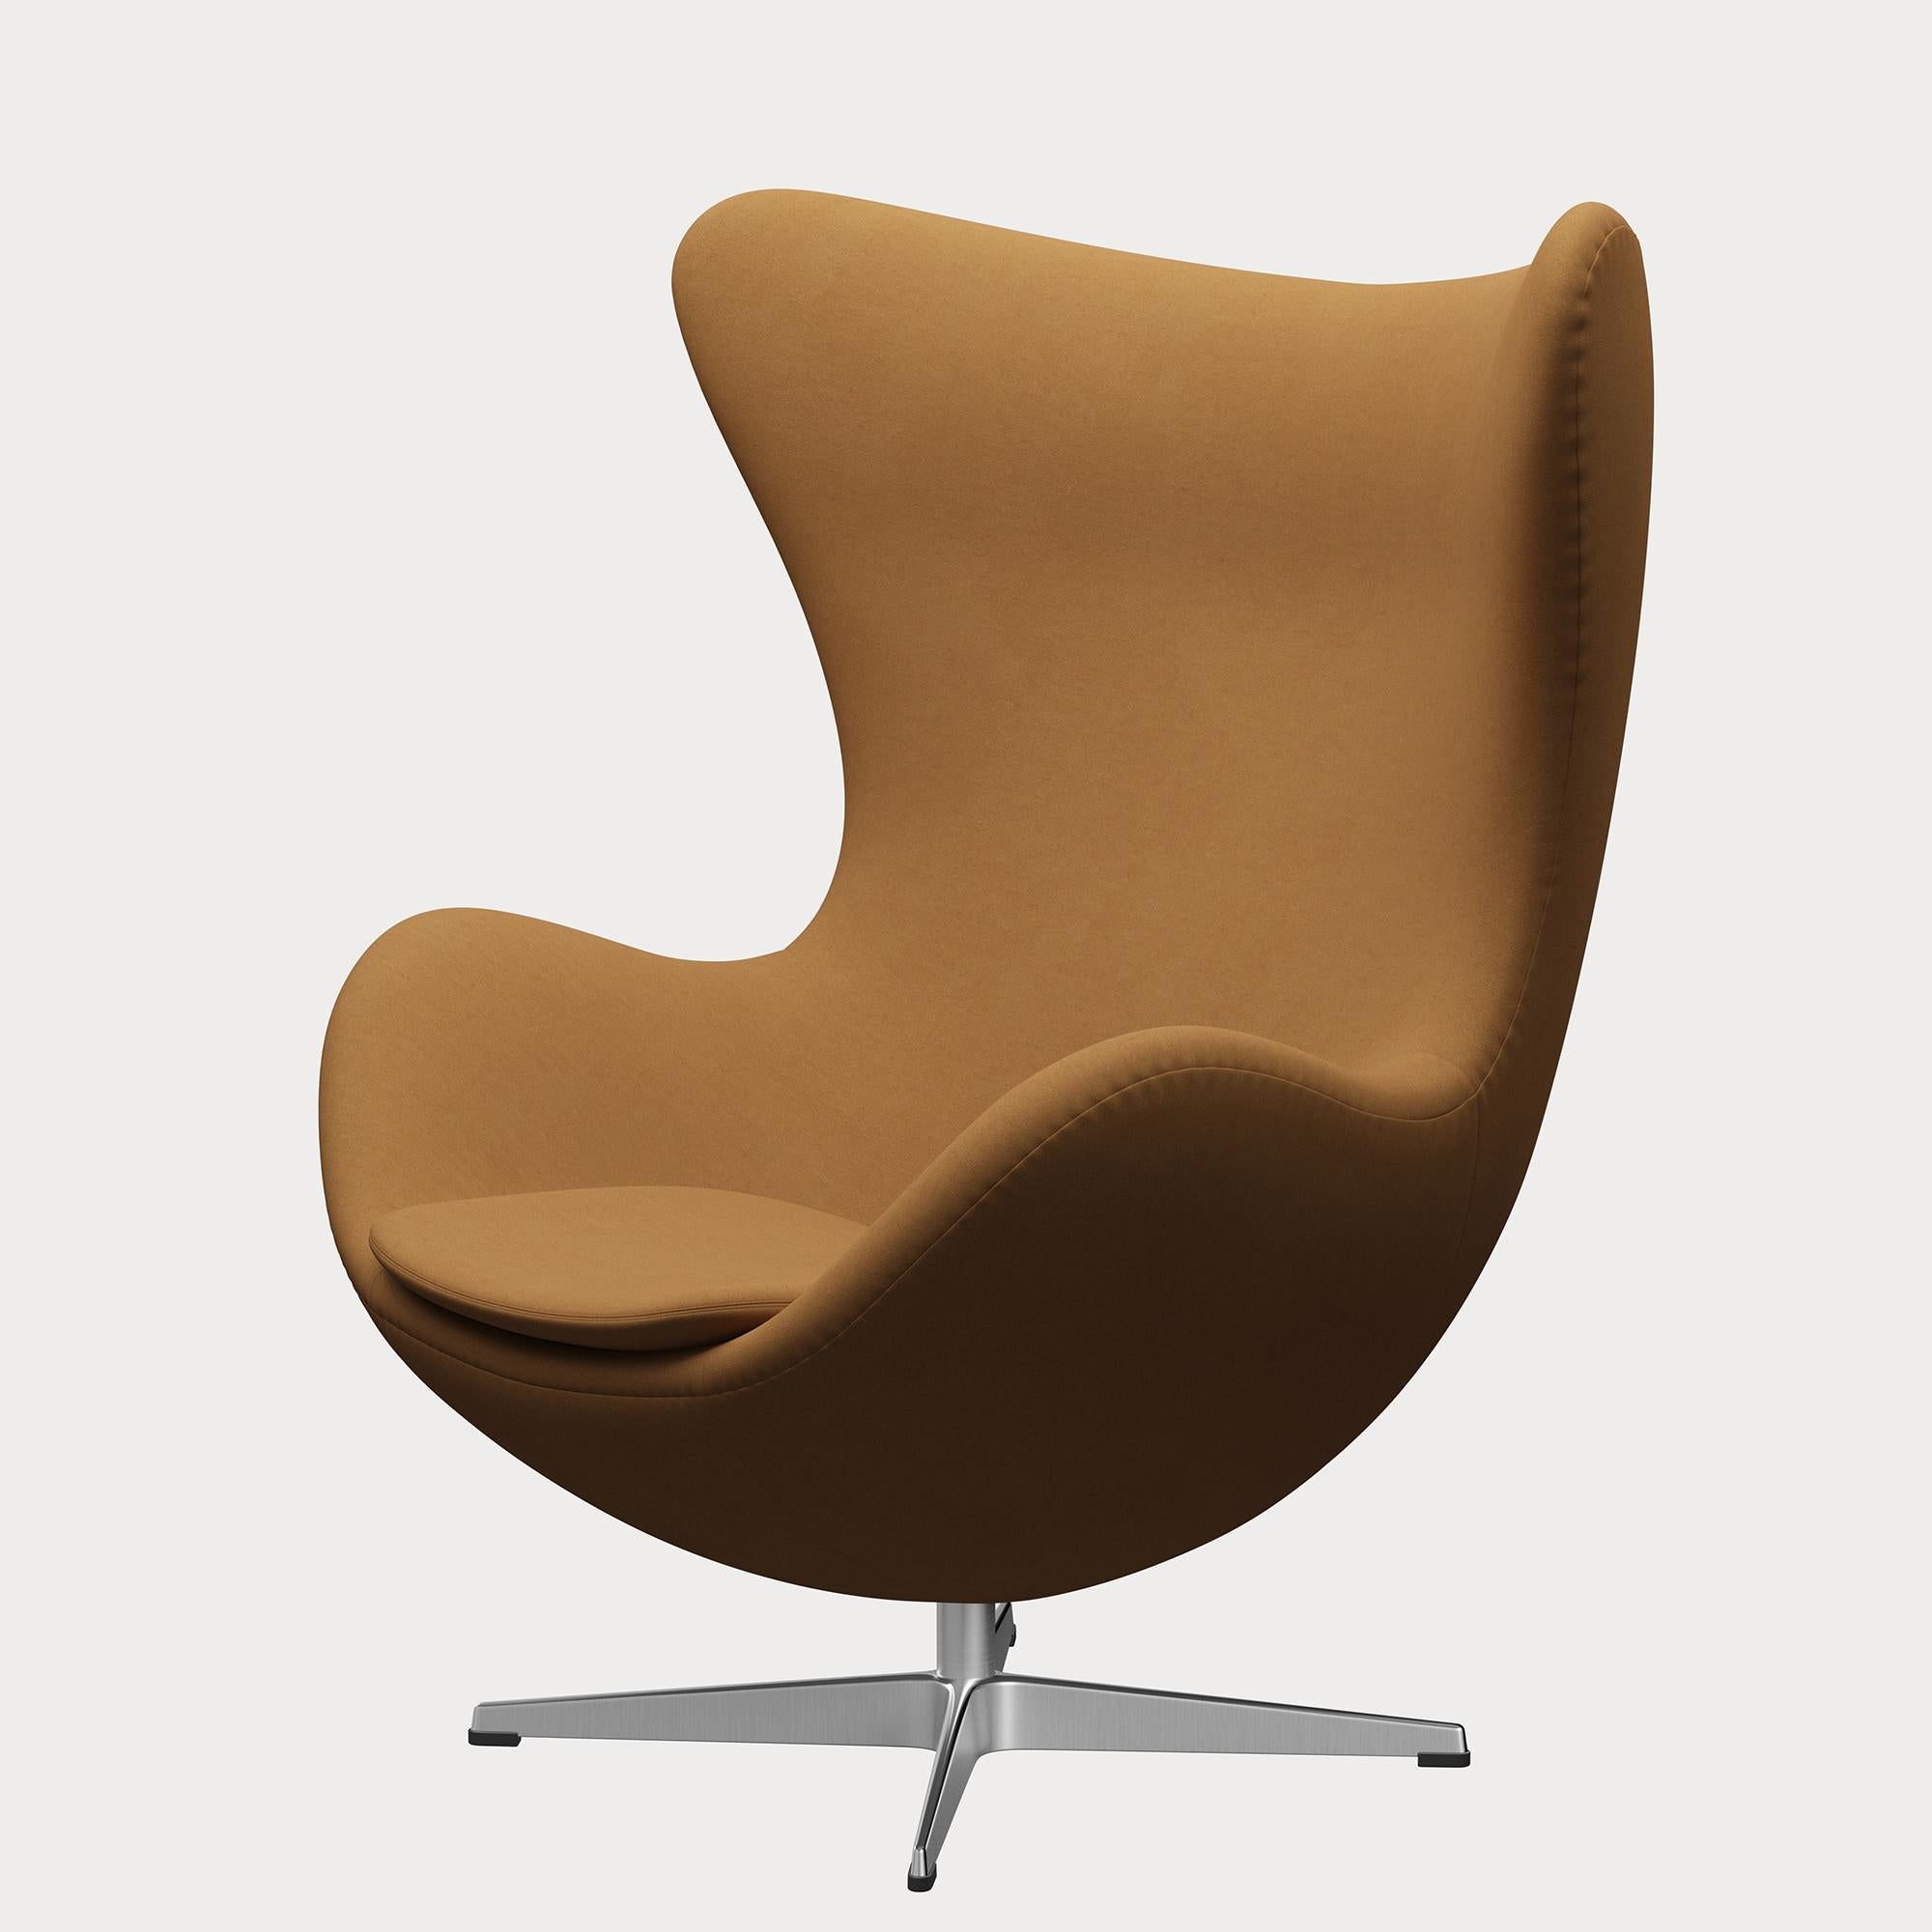 Contemporary Arne Jacobsen 'Egg' Chair for Fritz Hansen in Fabric Upholstery (Cat. 3) For Sale